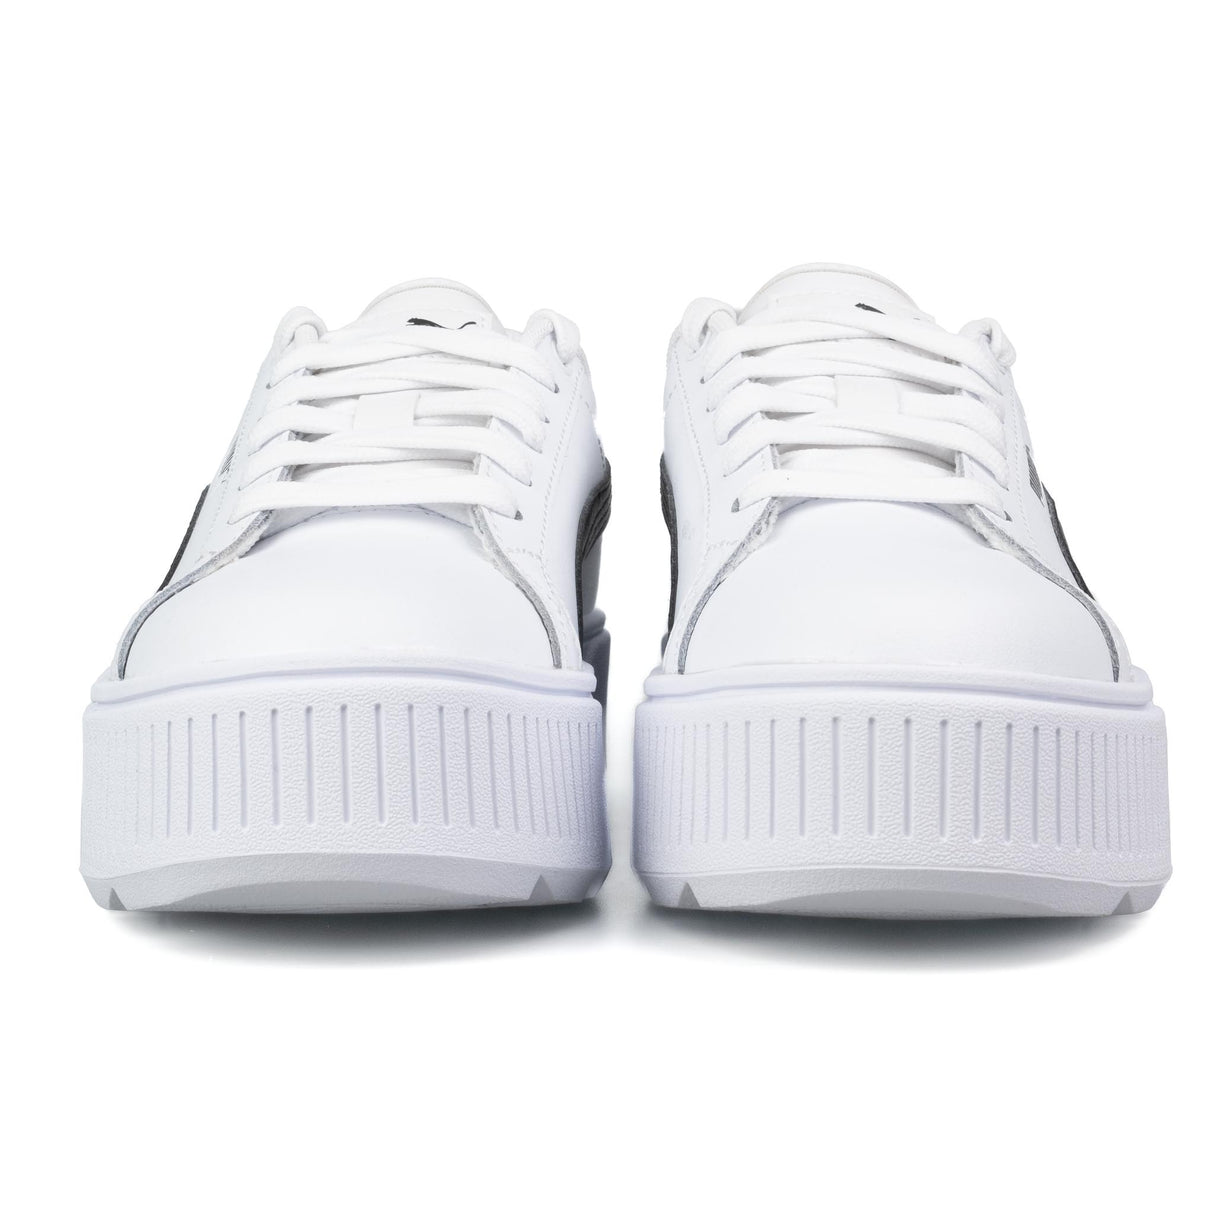 Puma Sneakers Karmen L Bianco/Nero 384615 02